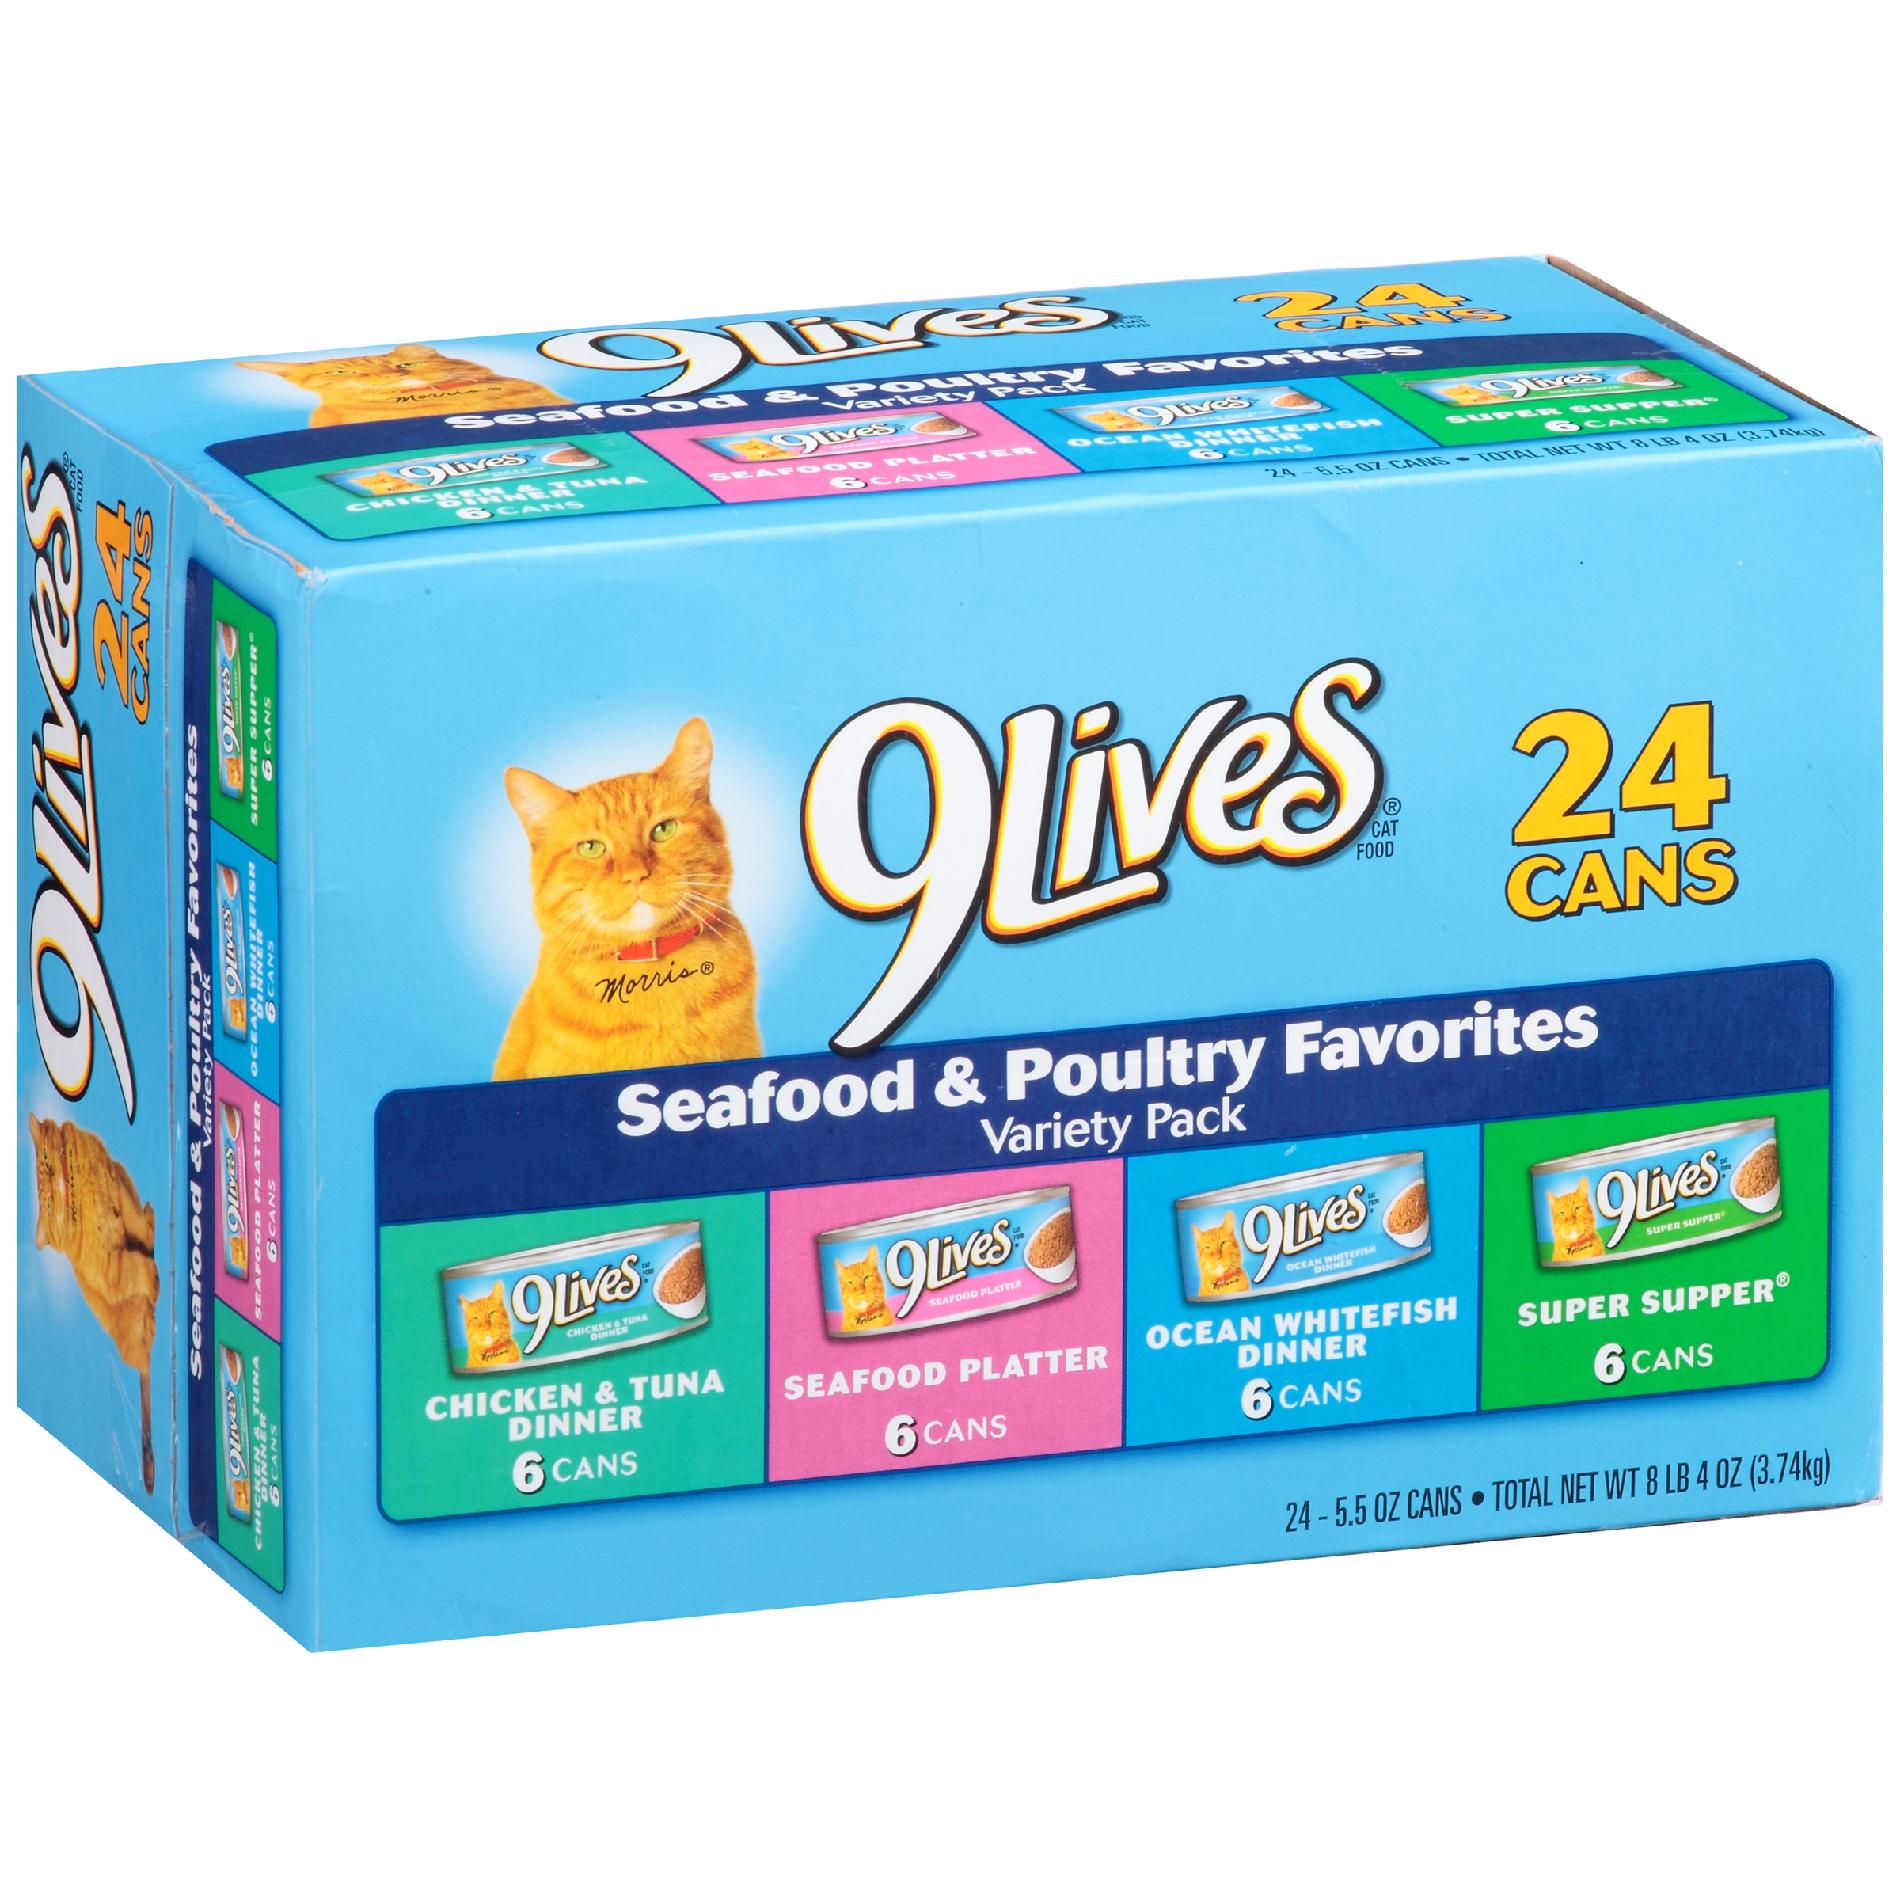 9Lives Cat Food, Seafood & Poultry Favorites Variety Pack, 24 - 5.5 oz cans, Net Wt 8 lb 4 oz (3.74 kg)